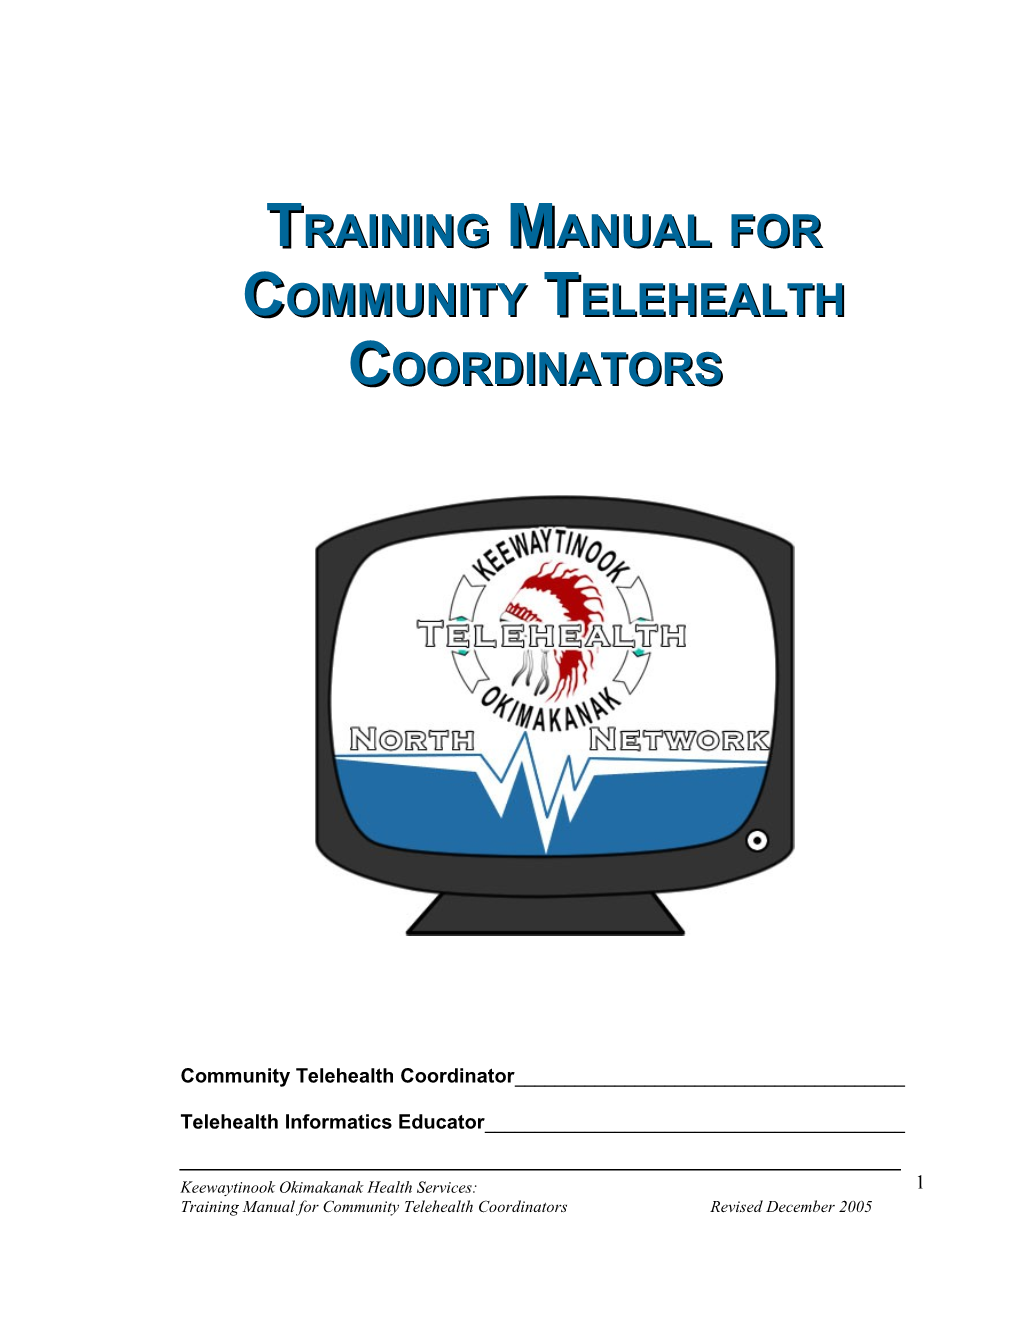 Training Workbook for Community Telehealth Coordinators and Backups